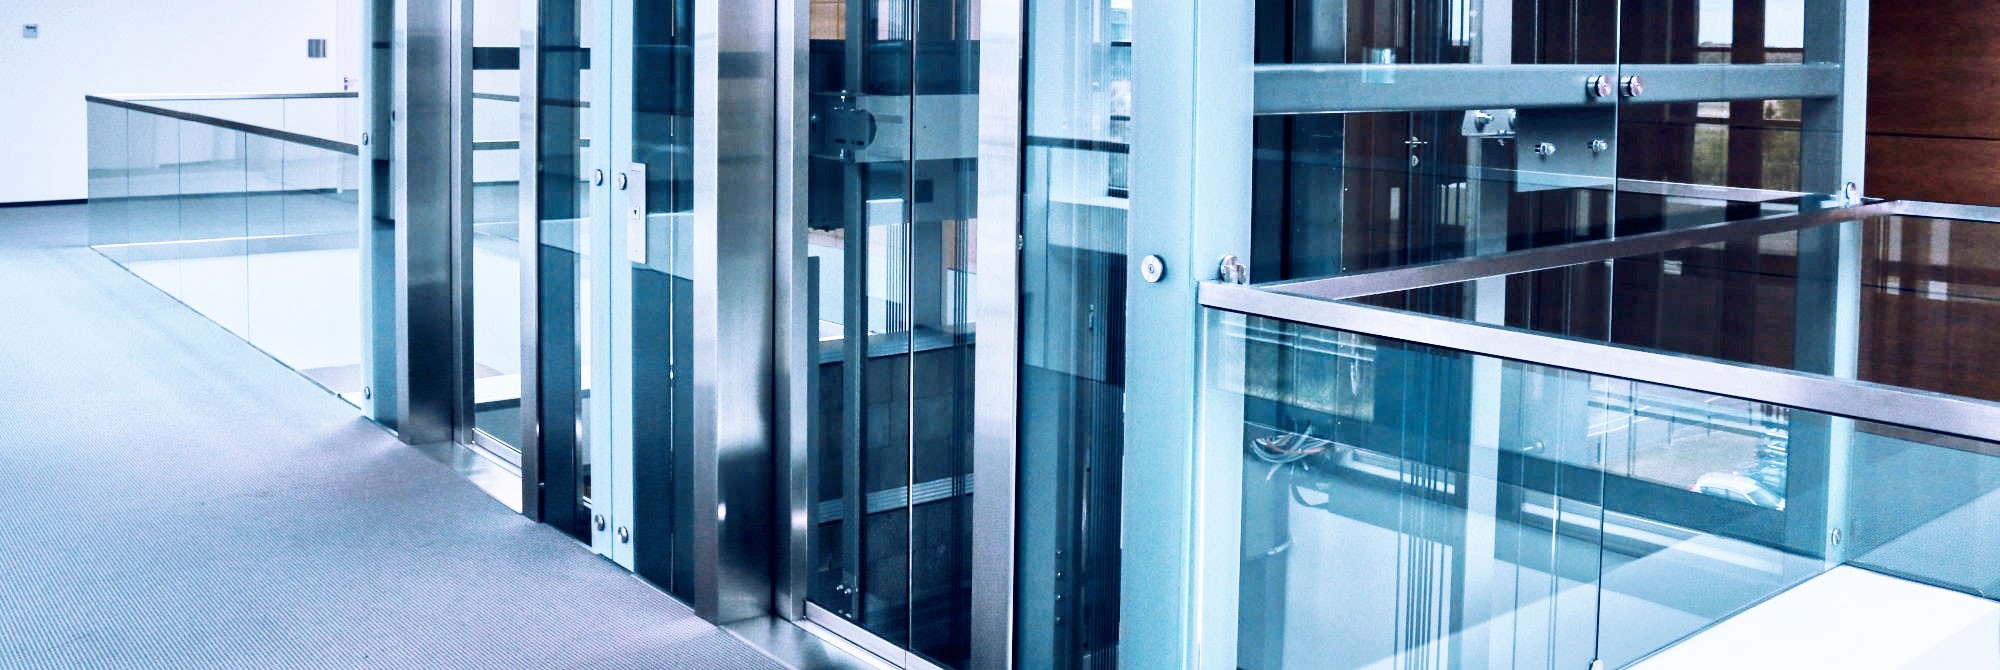 Elevators - thyssenkrupp Elevator UK